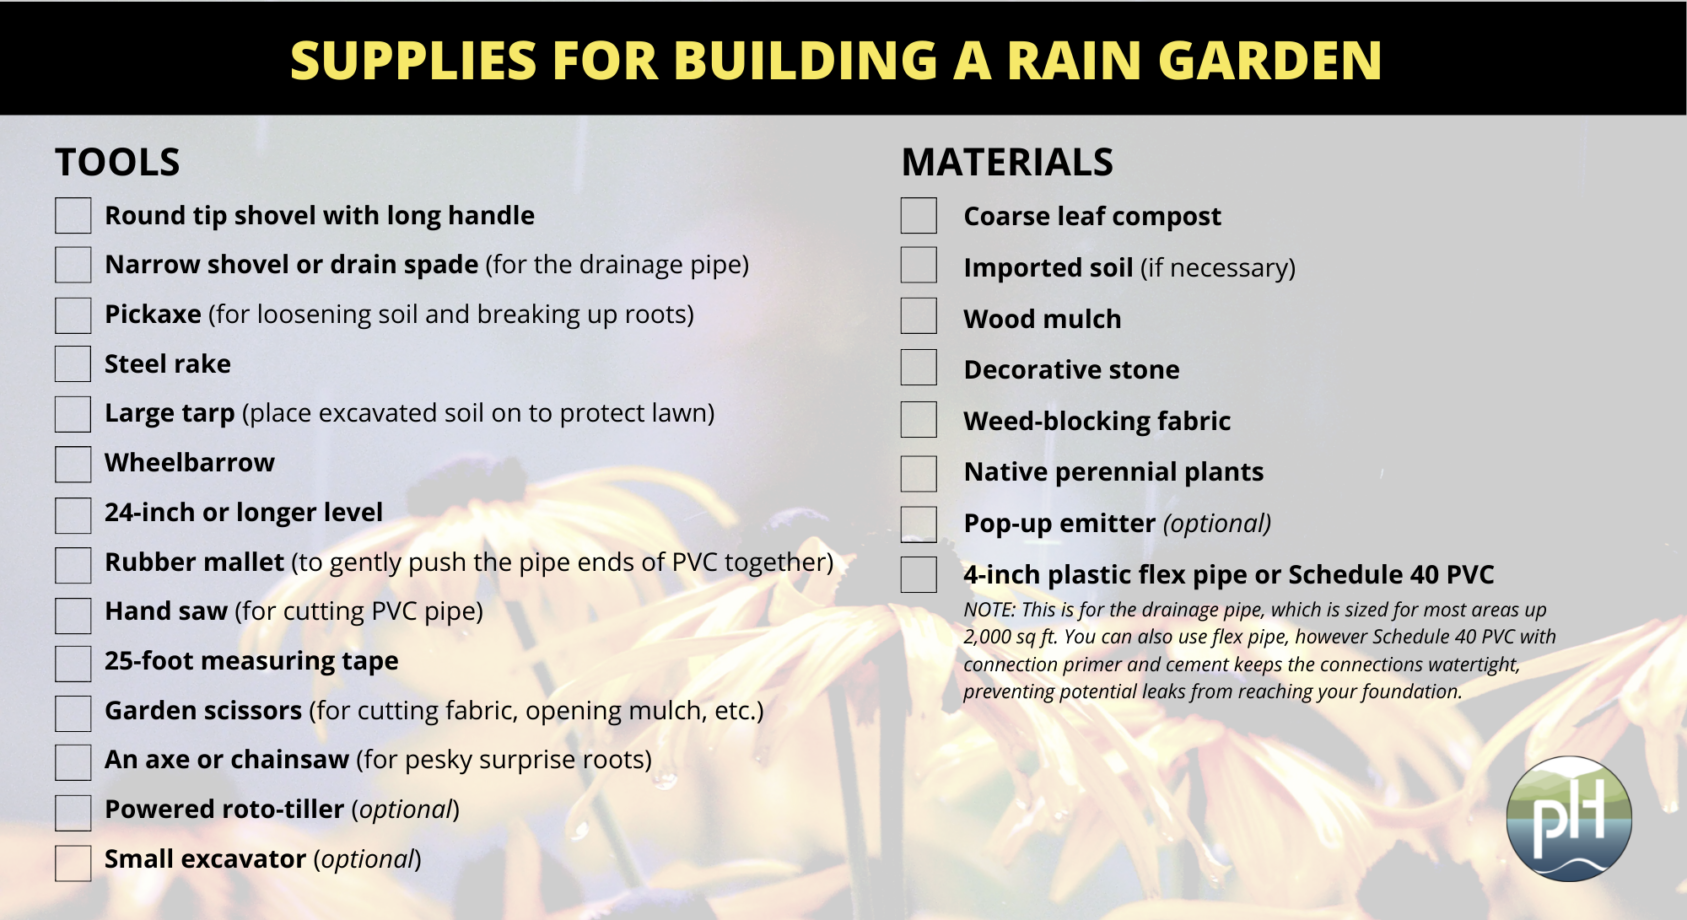 How Do I Build a Rain Garden? 